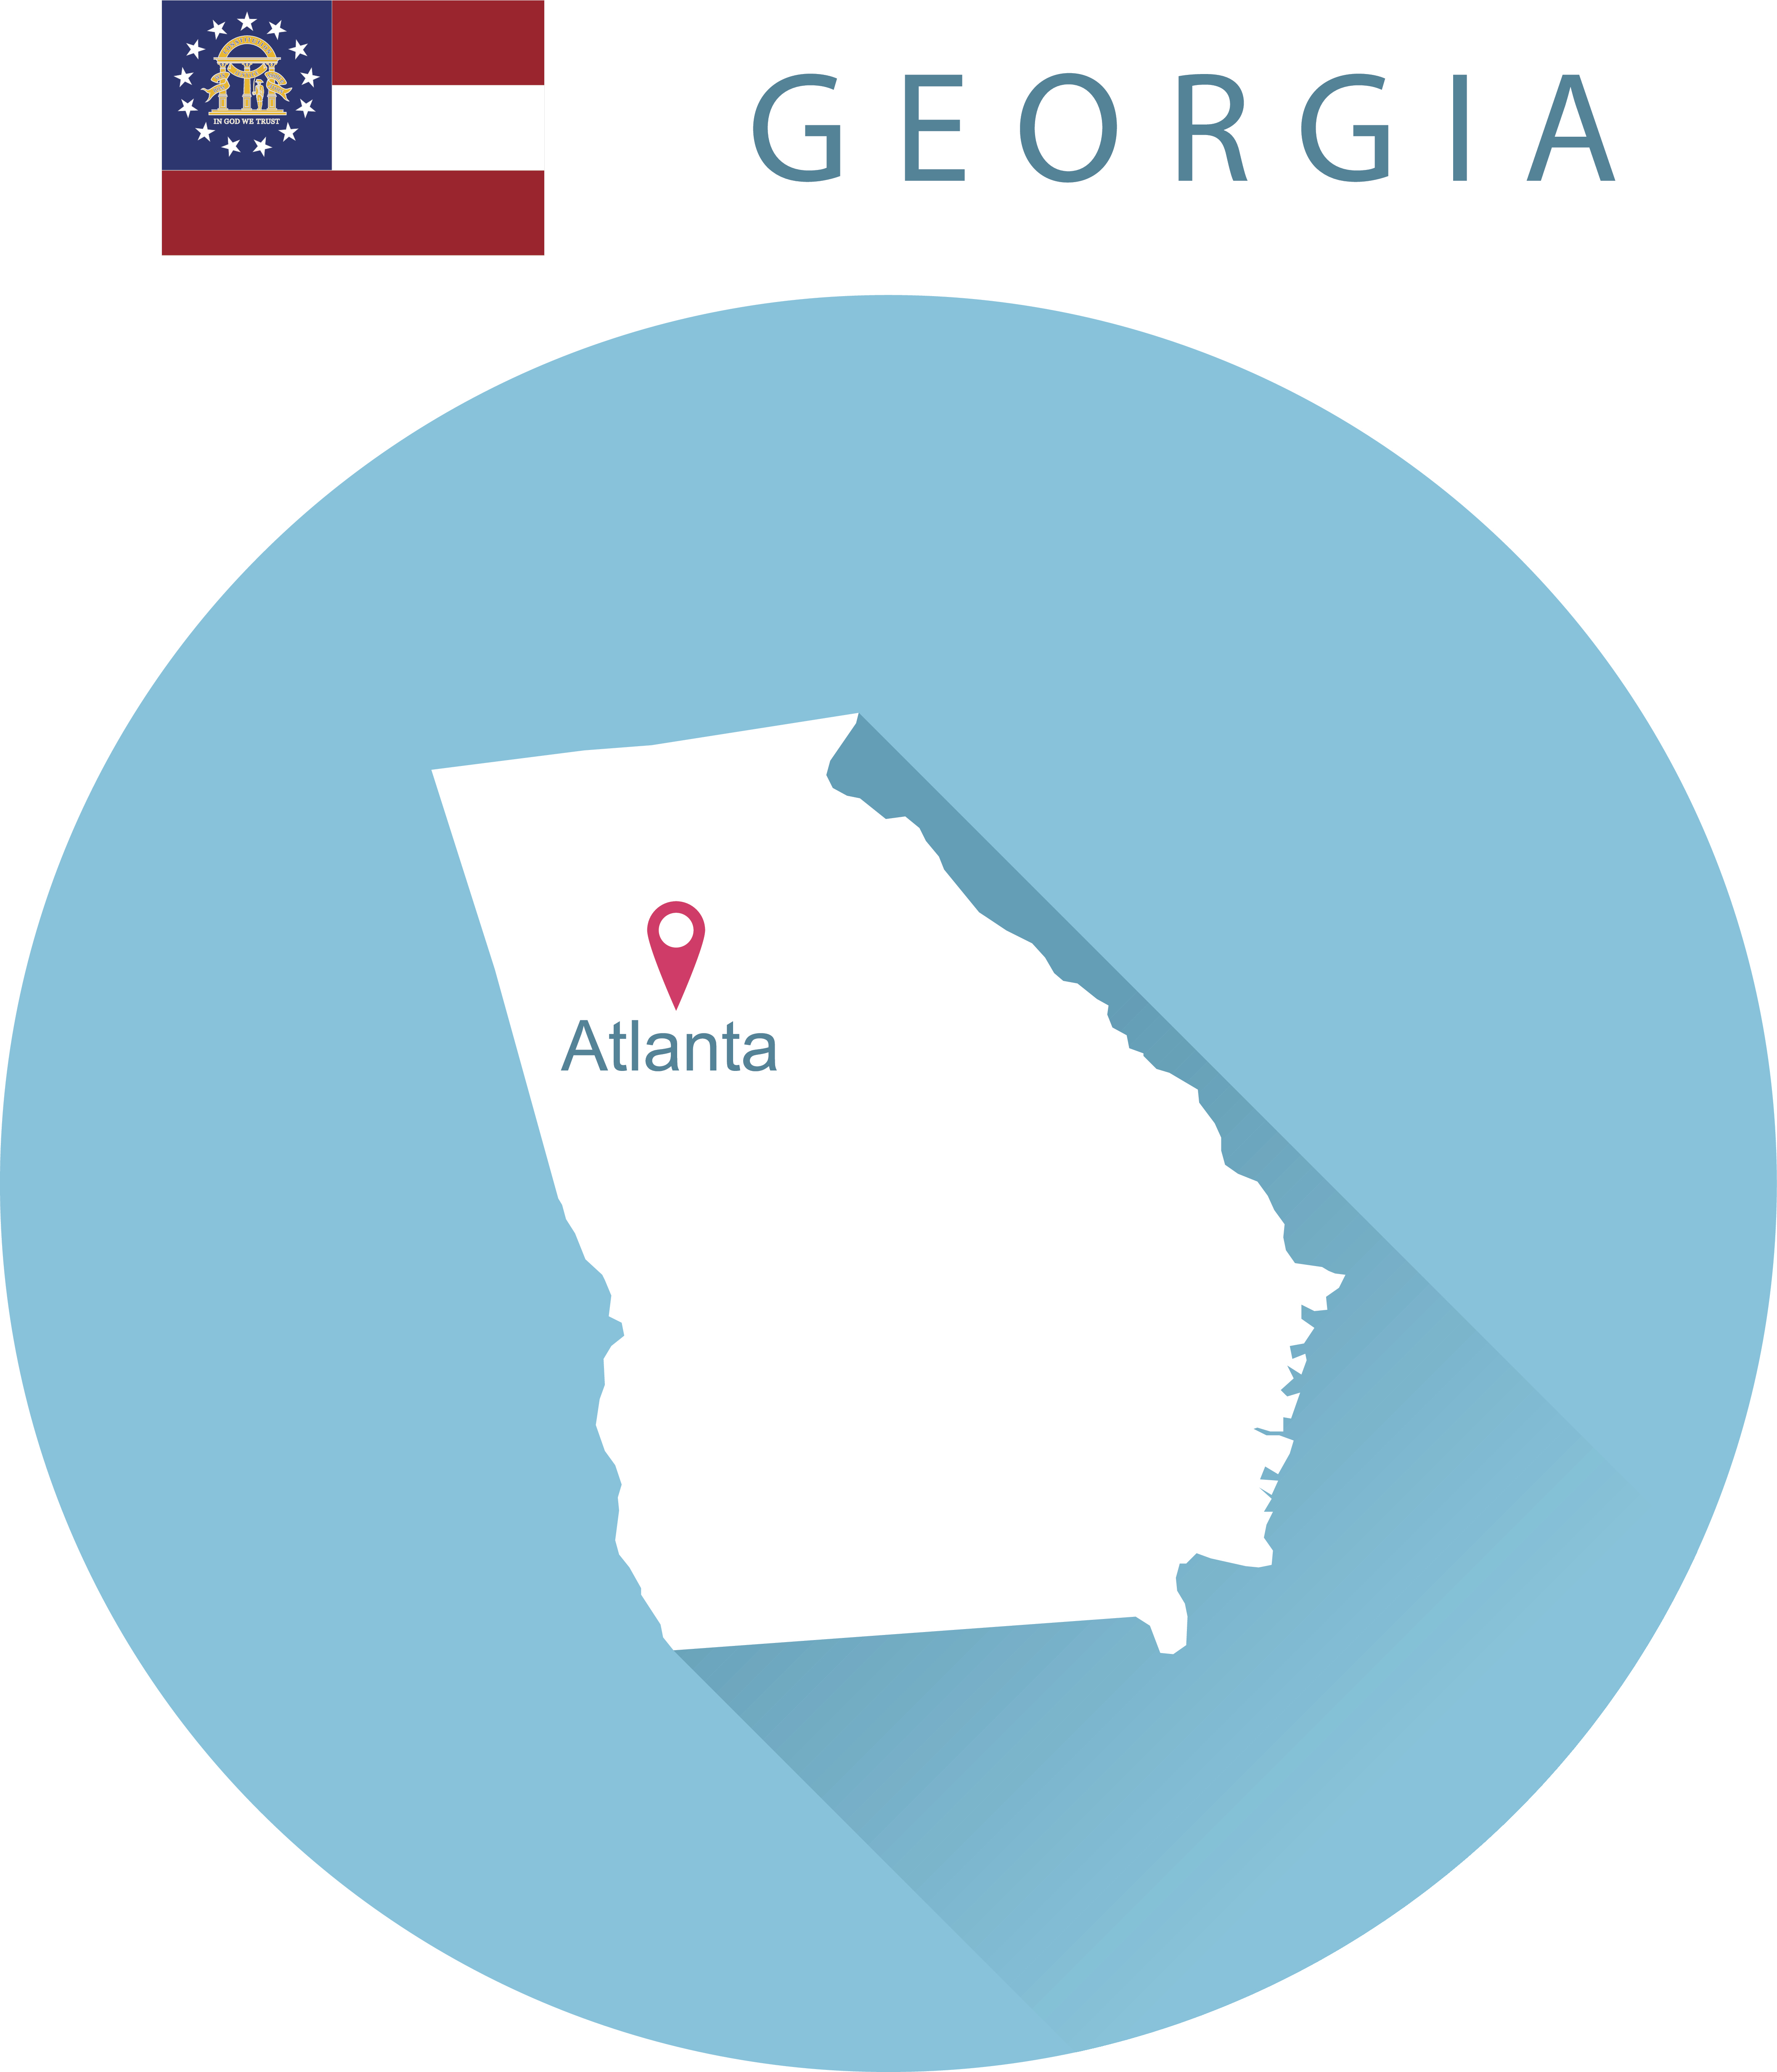 USA state Of Georgia's map and Flag